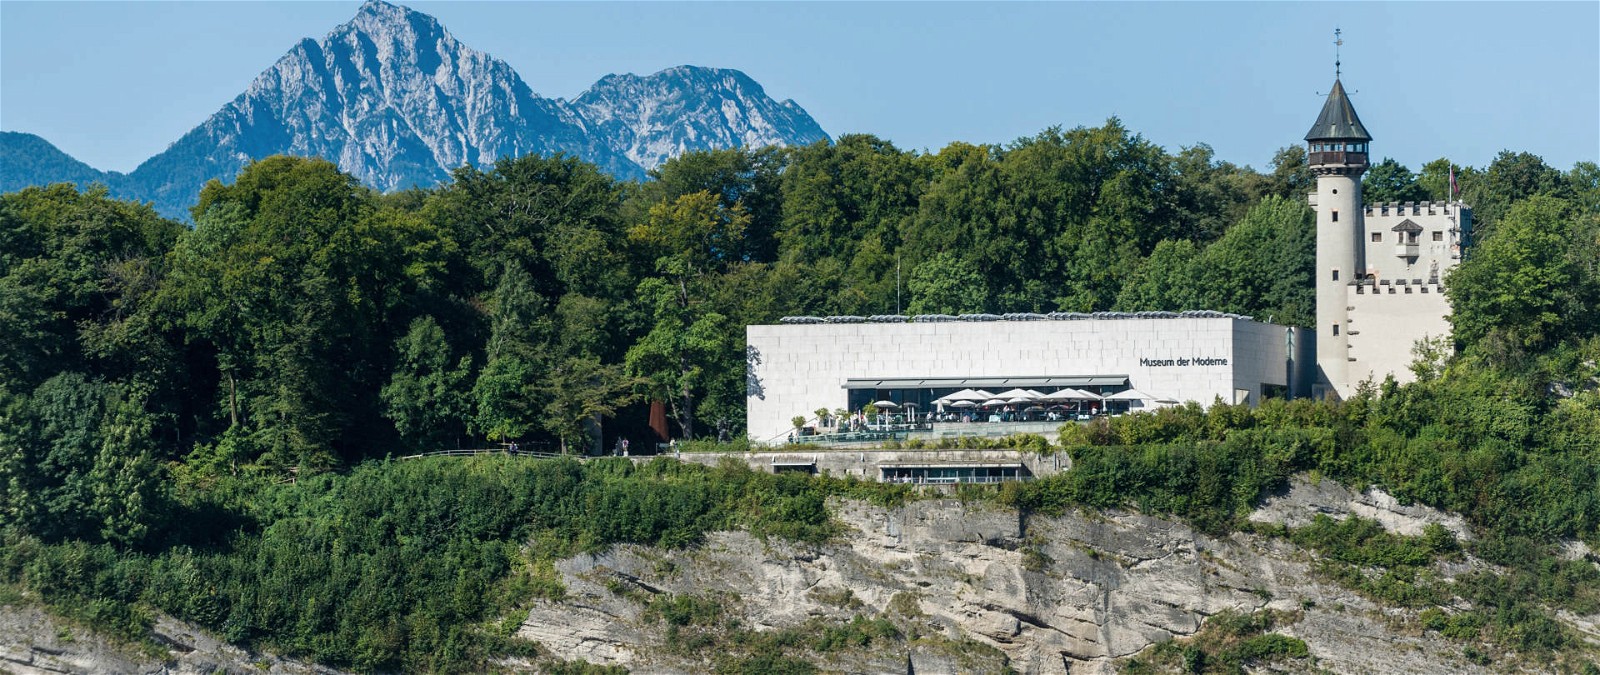 The Salzburg Museum of Modern Art